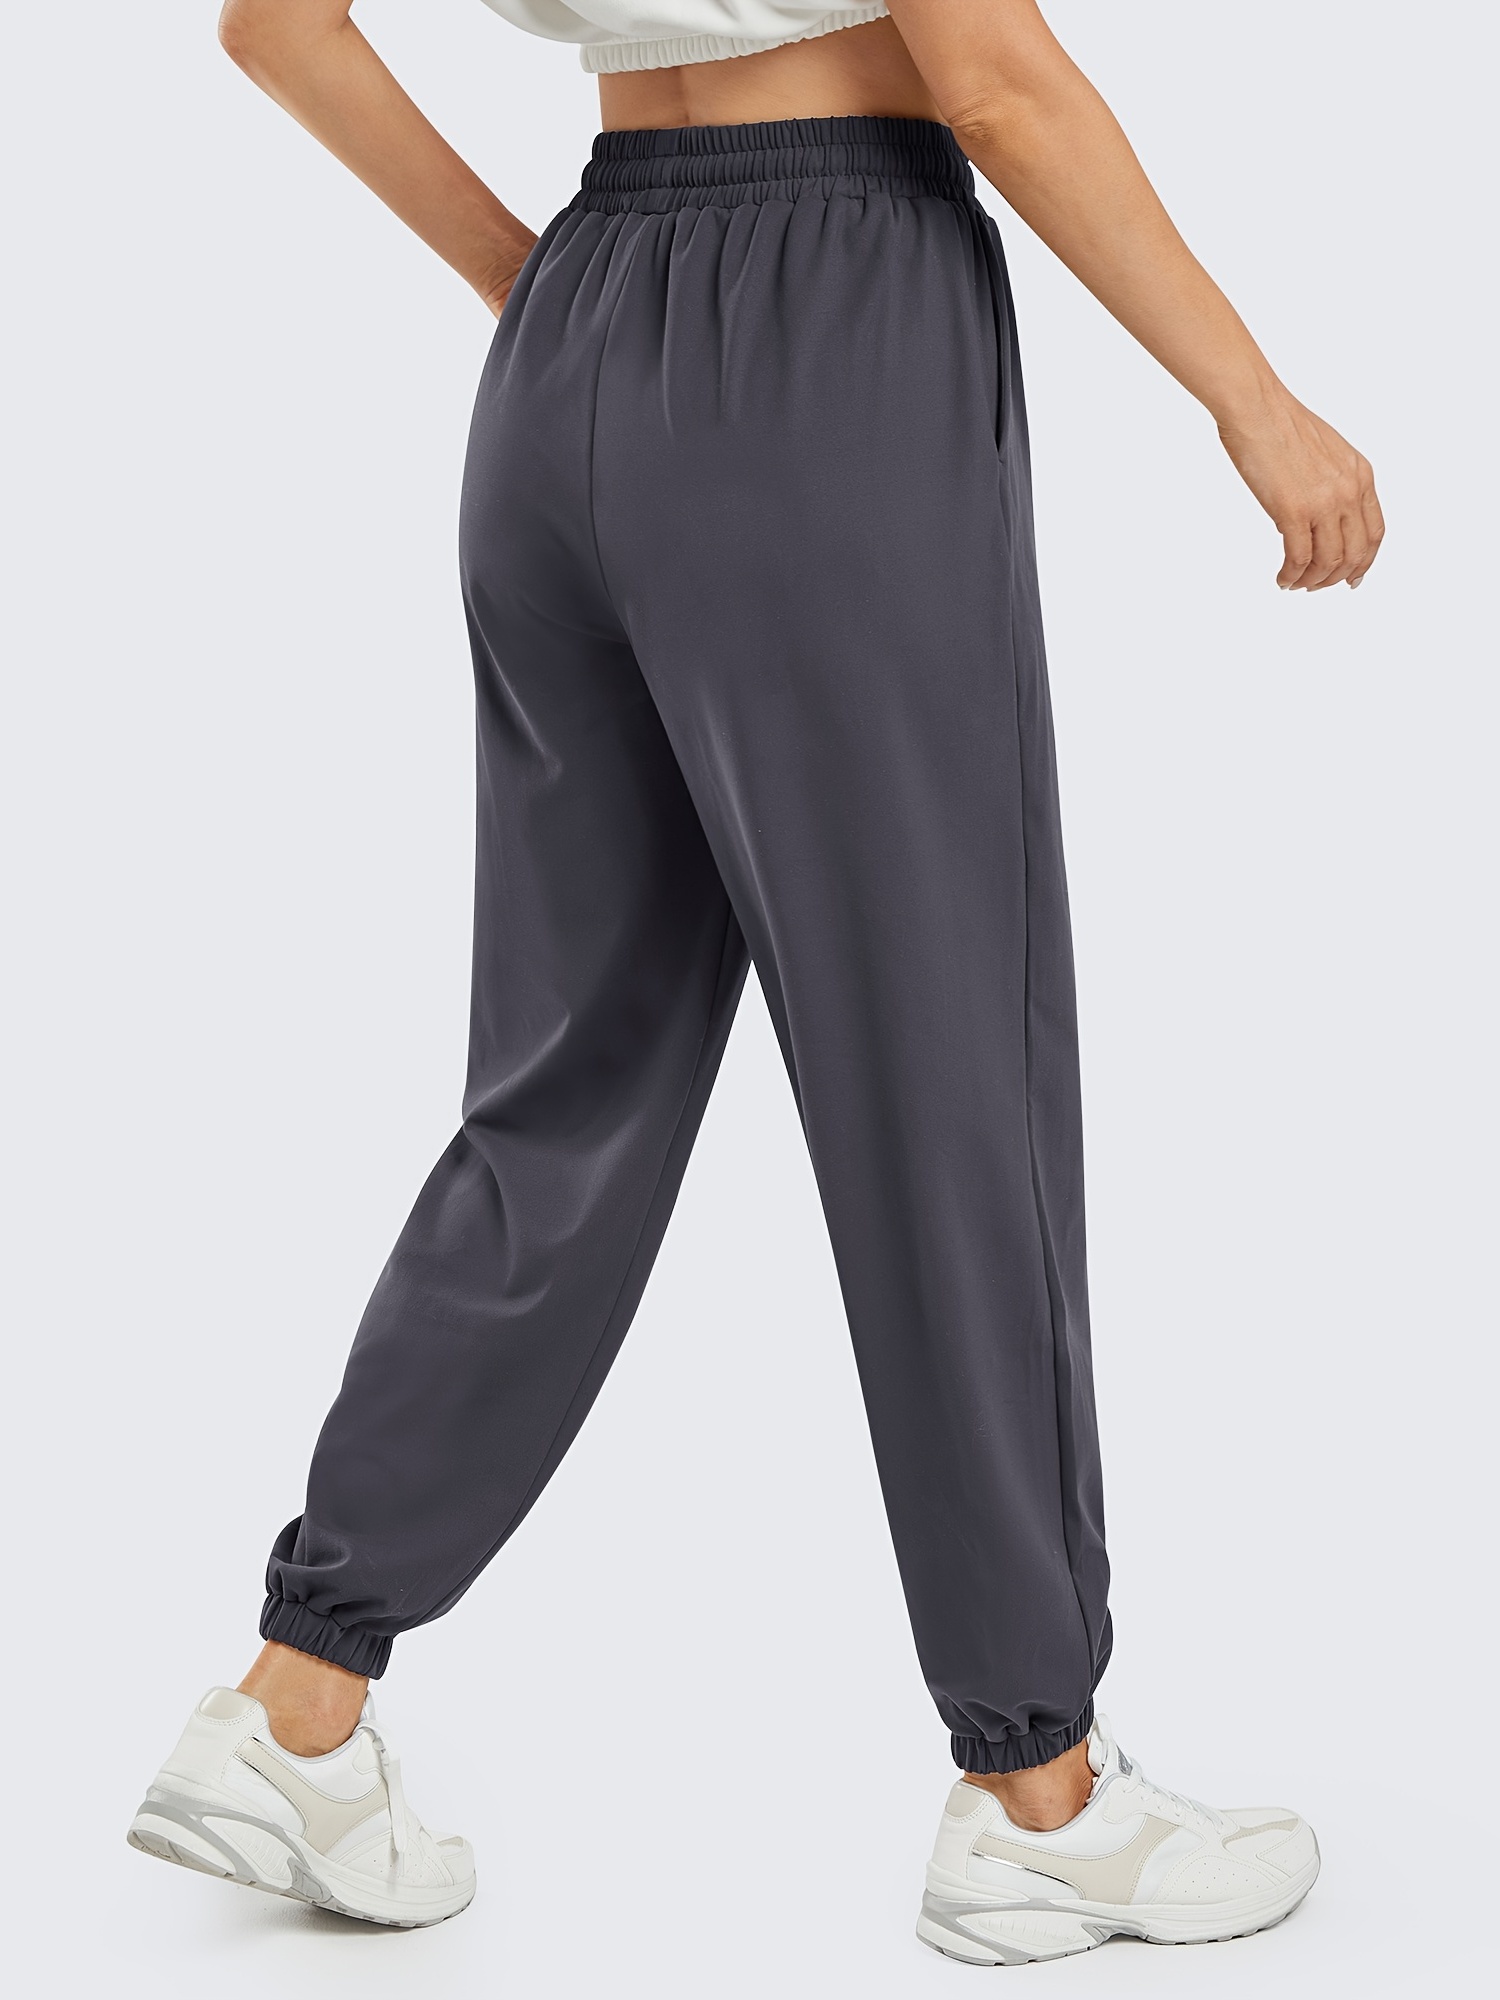 Women's Bottom Sweatpants Joggers Pants Workout High Waisted Yoga Pants  with Pockets Woman Office Pants